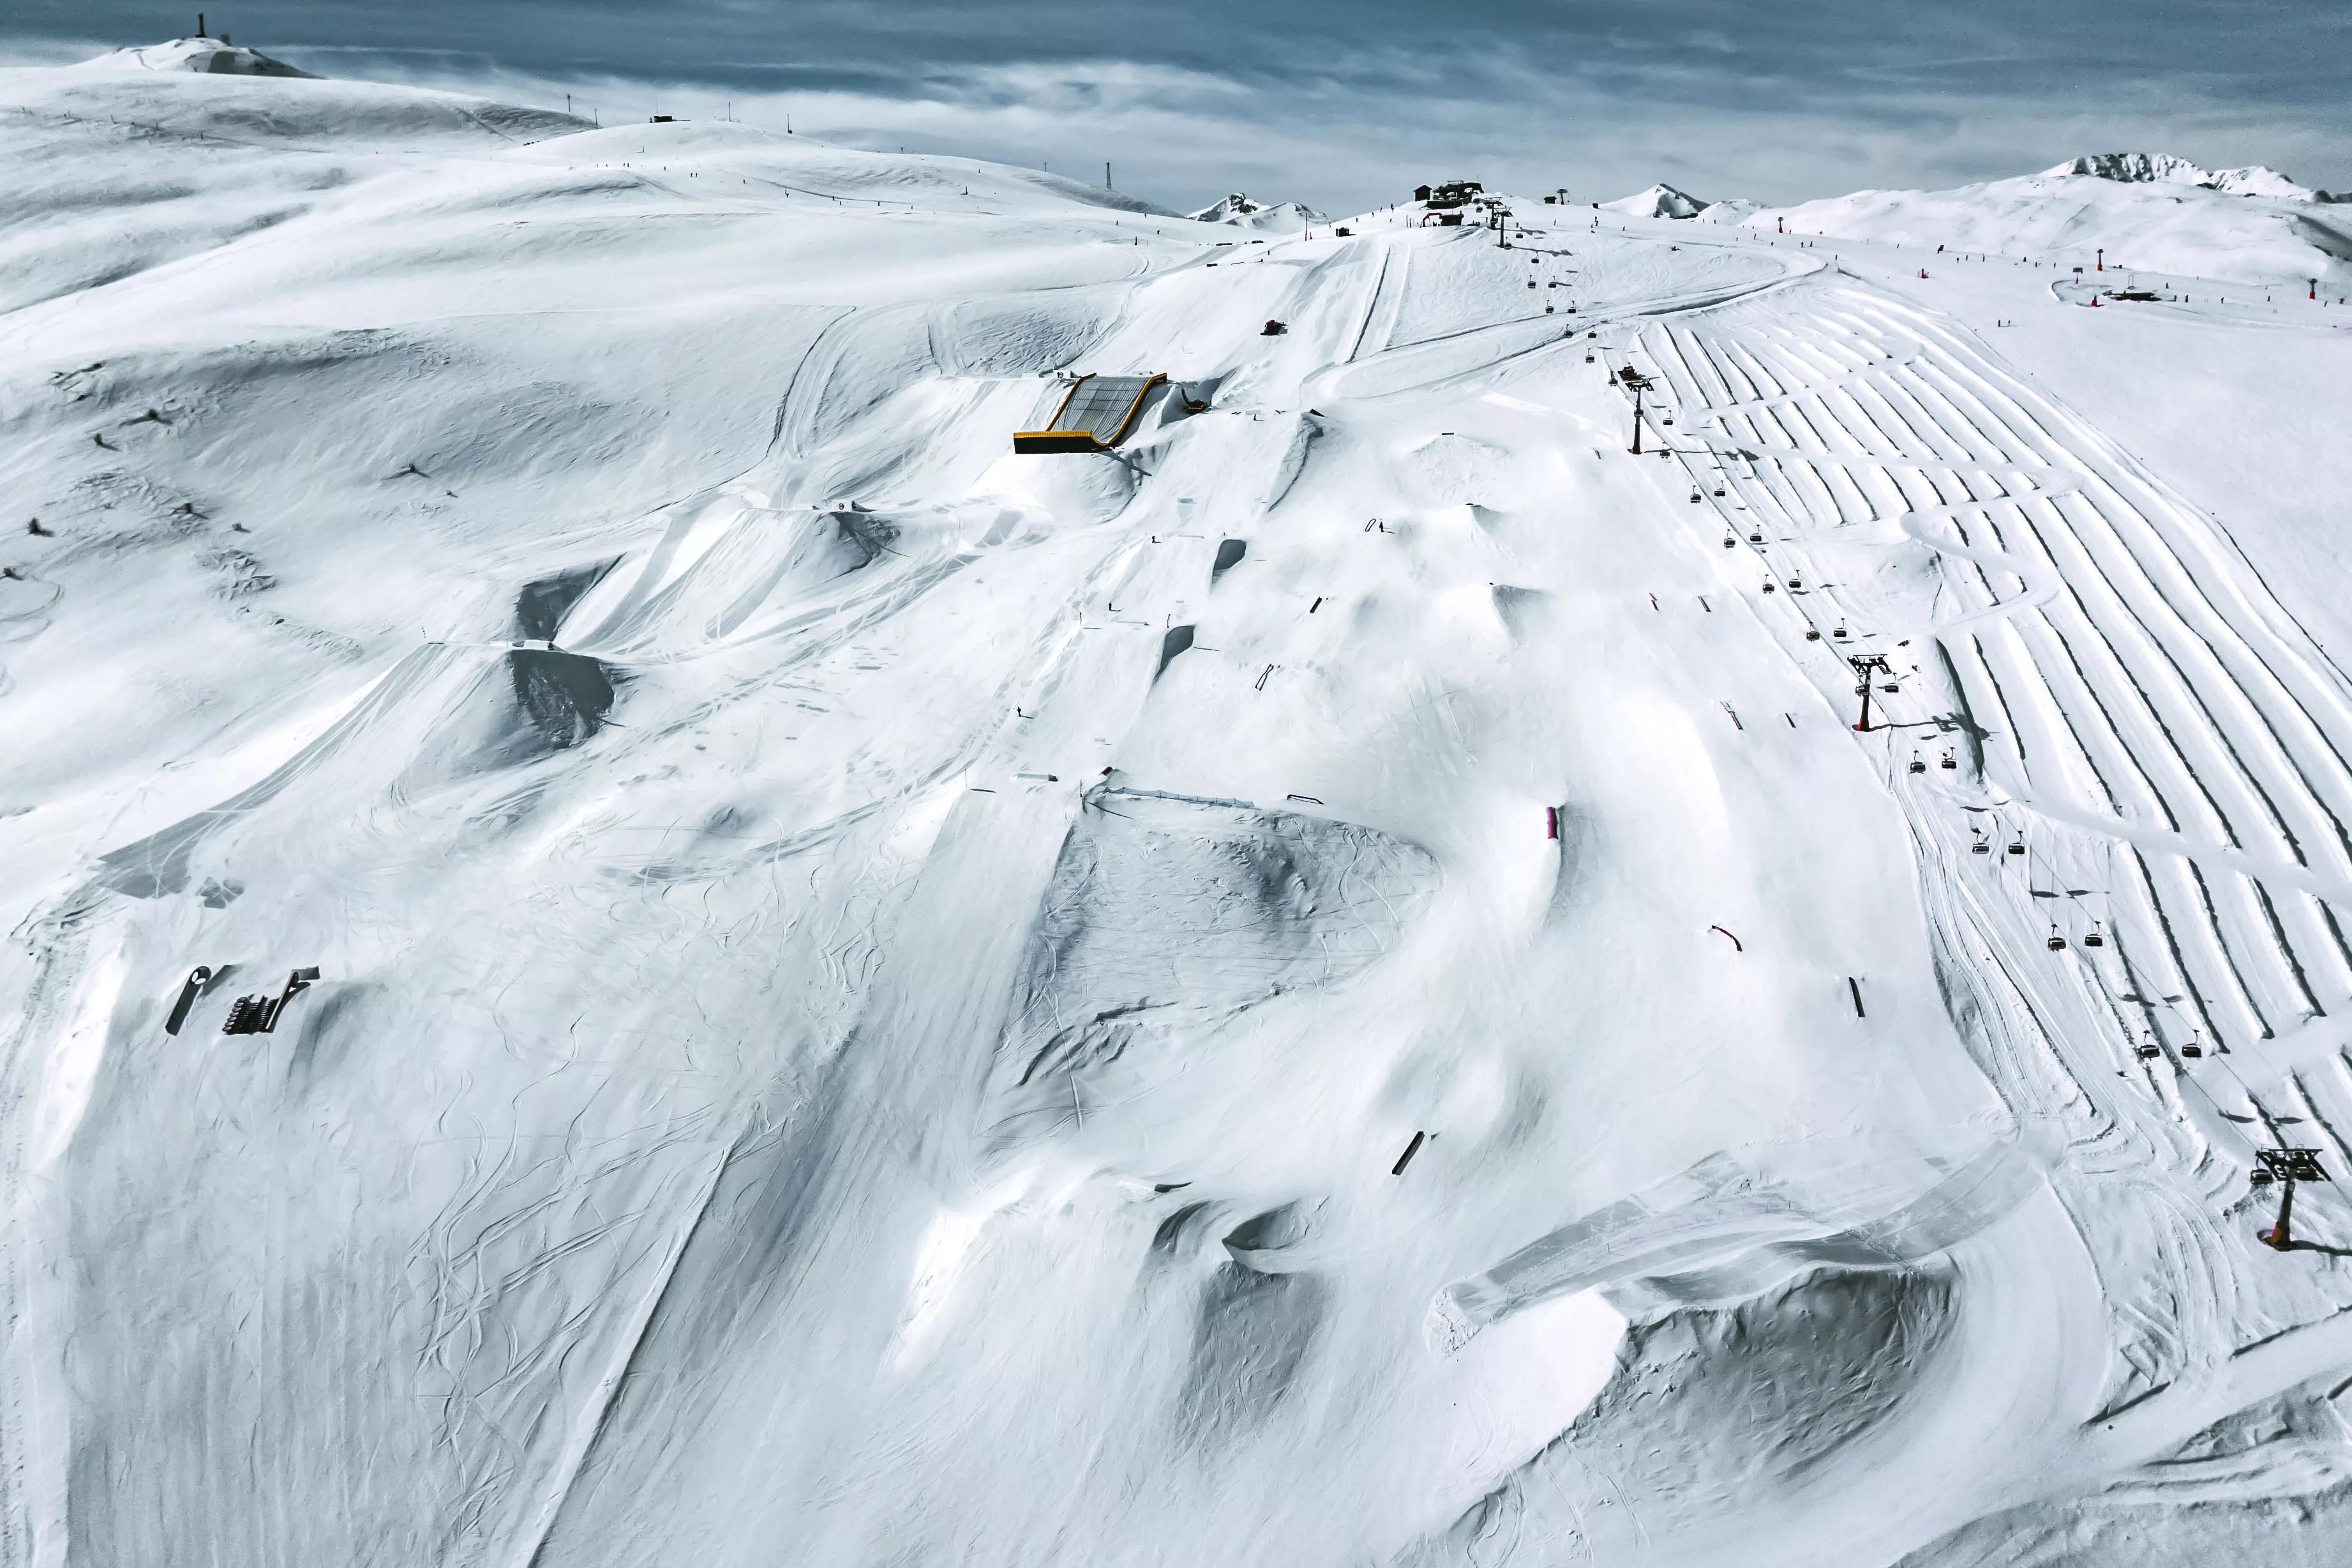 Mottolino Fun Mountain in Italy, Europe | Snowboarding,Skiing - Rated 5